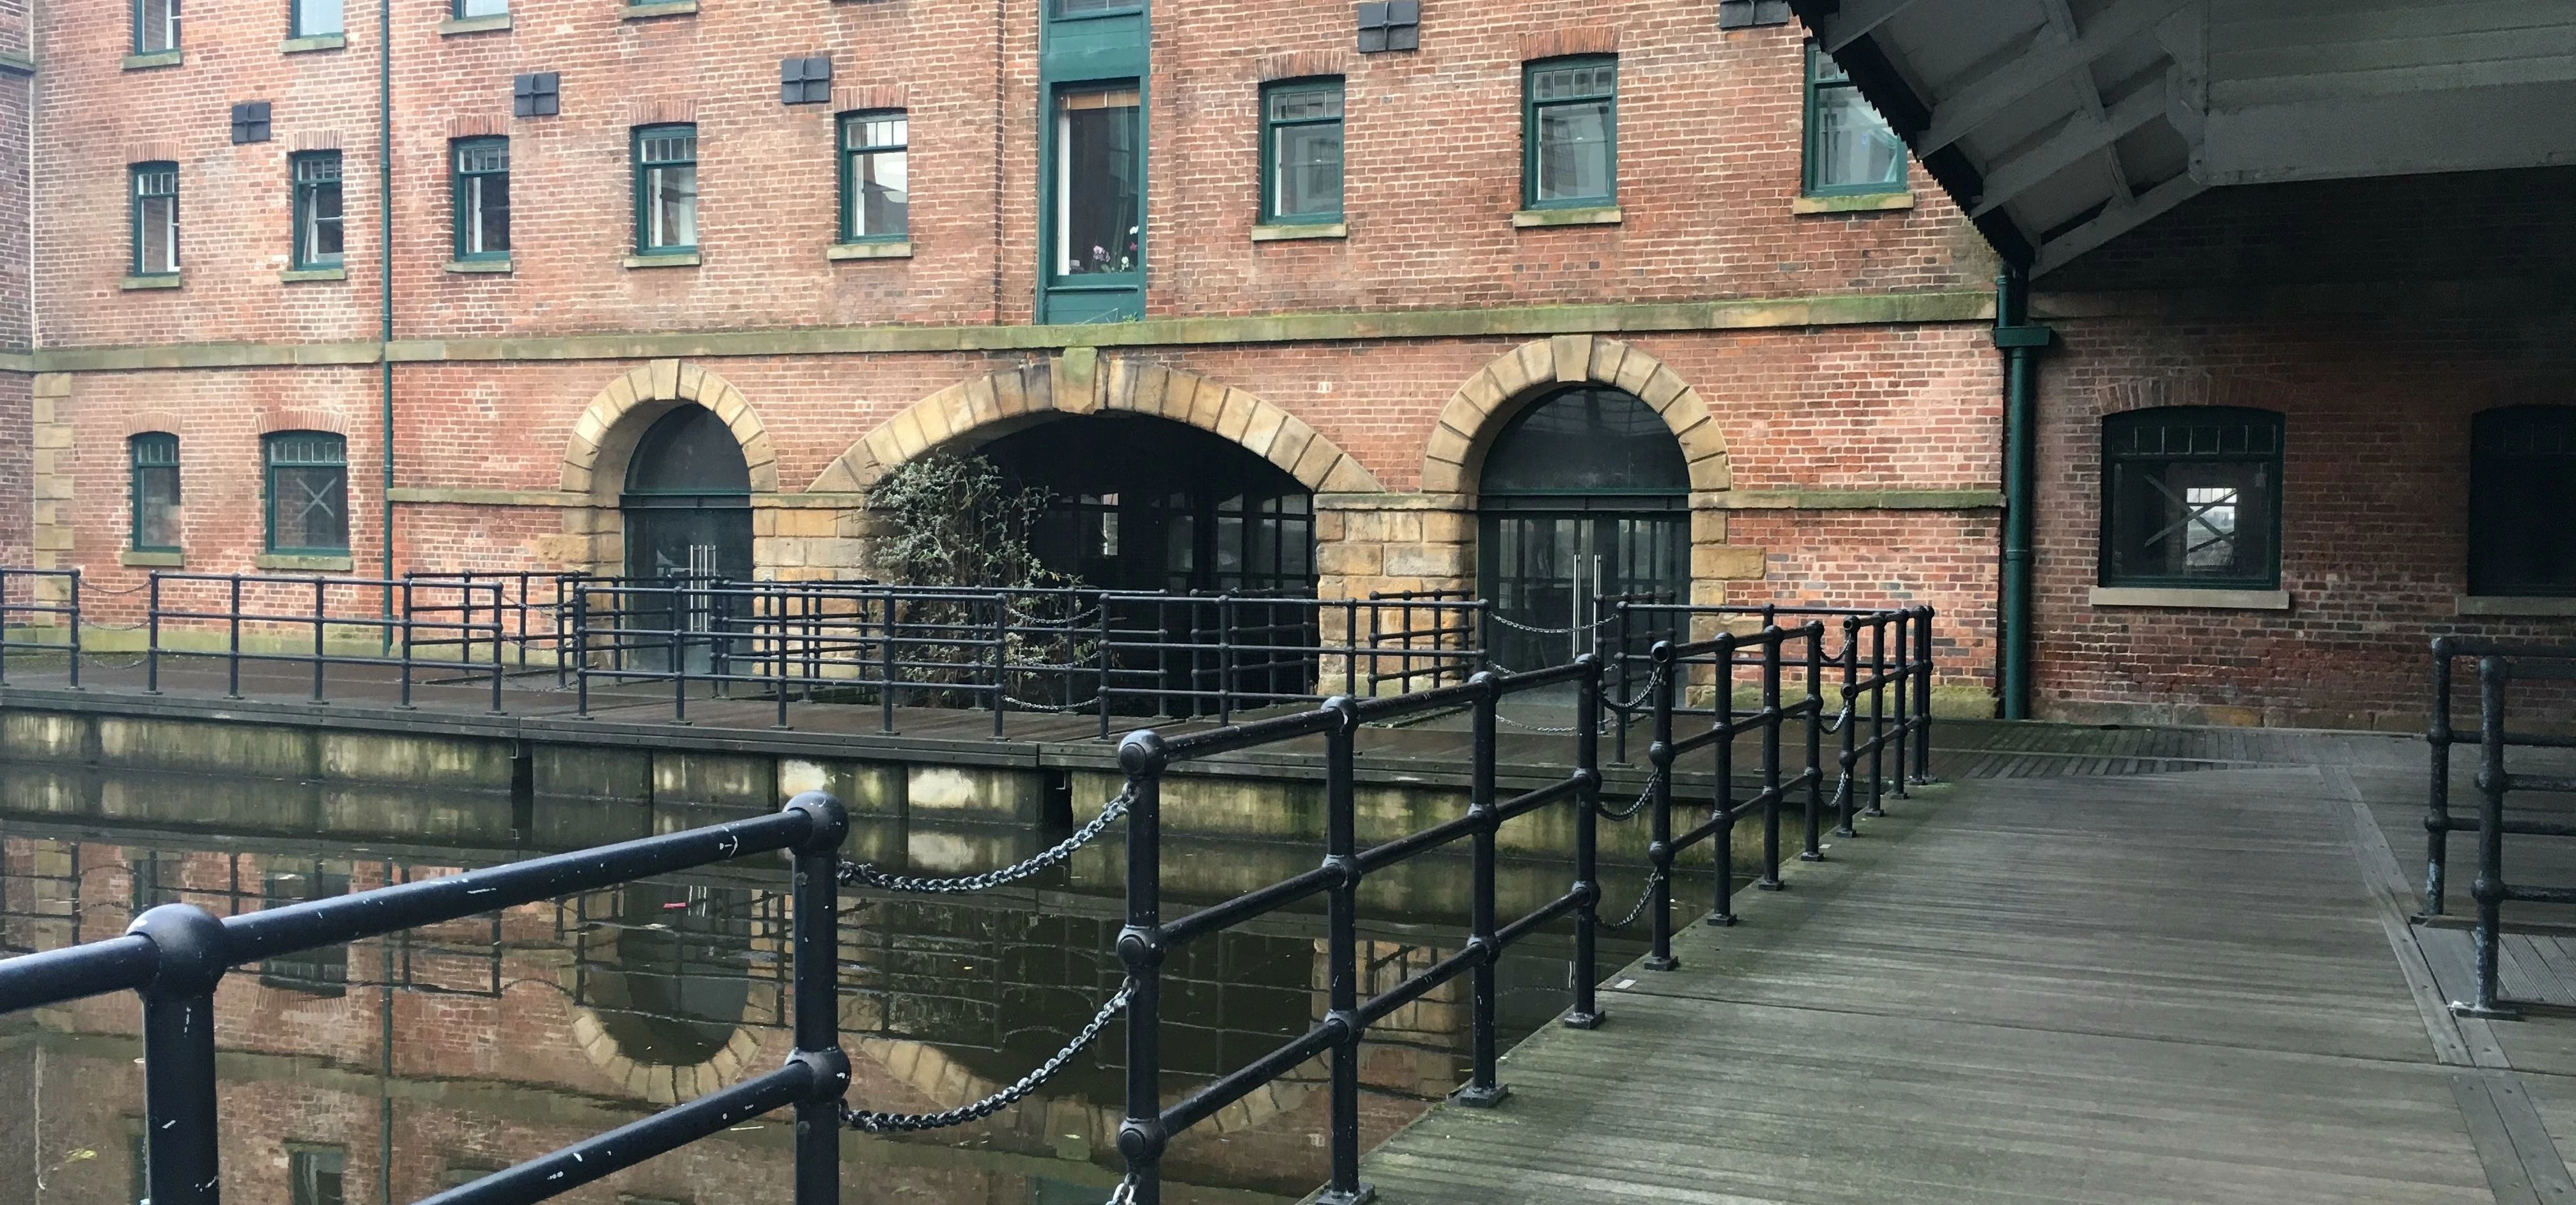 Sheffield's historic Victoria Quays